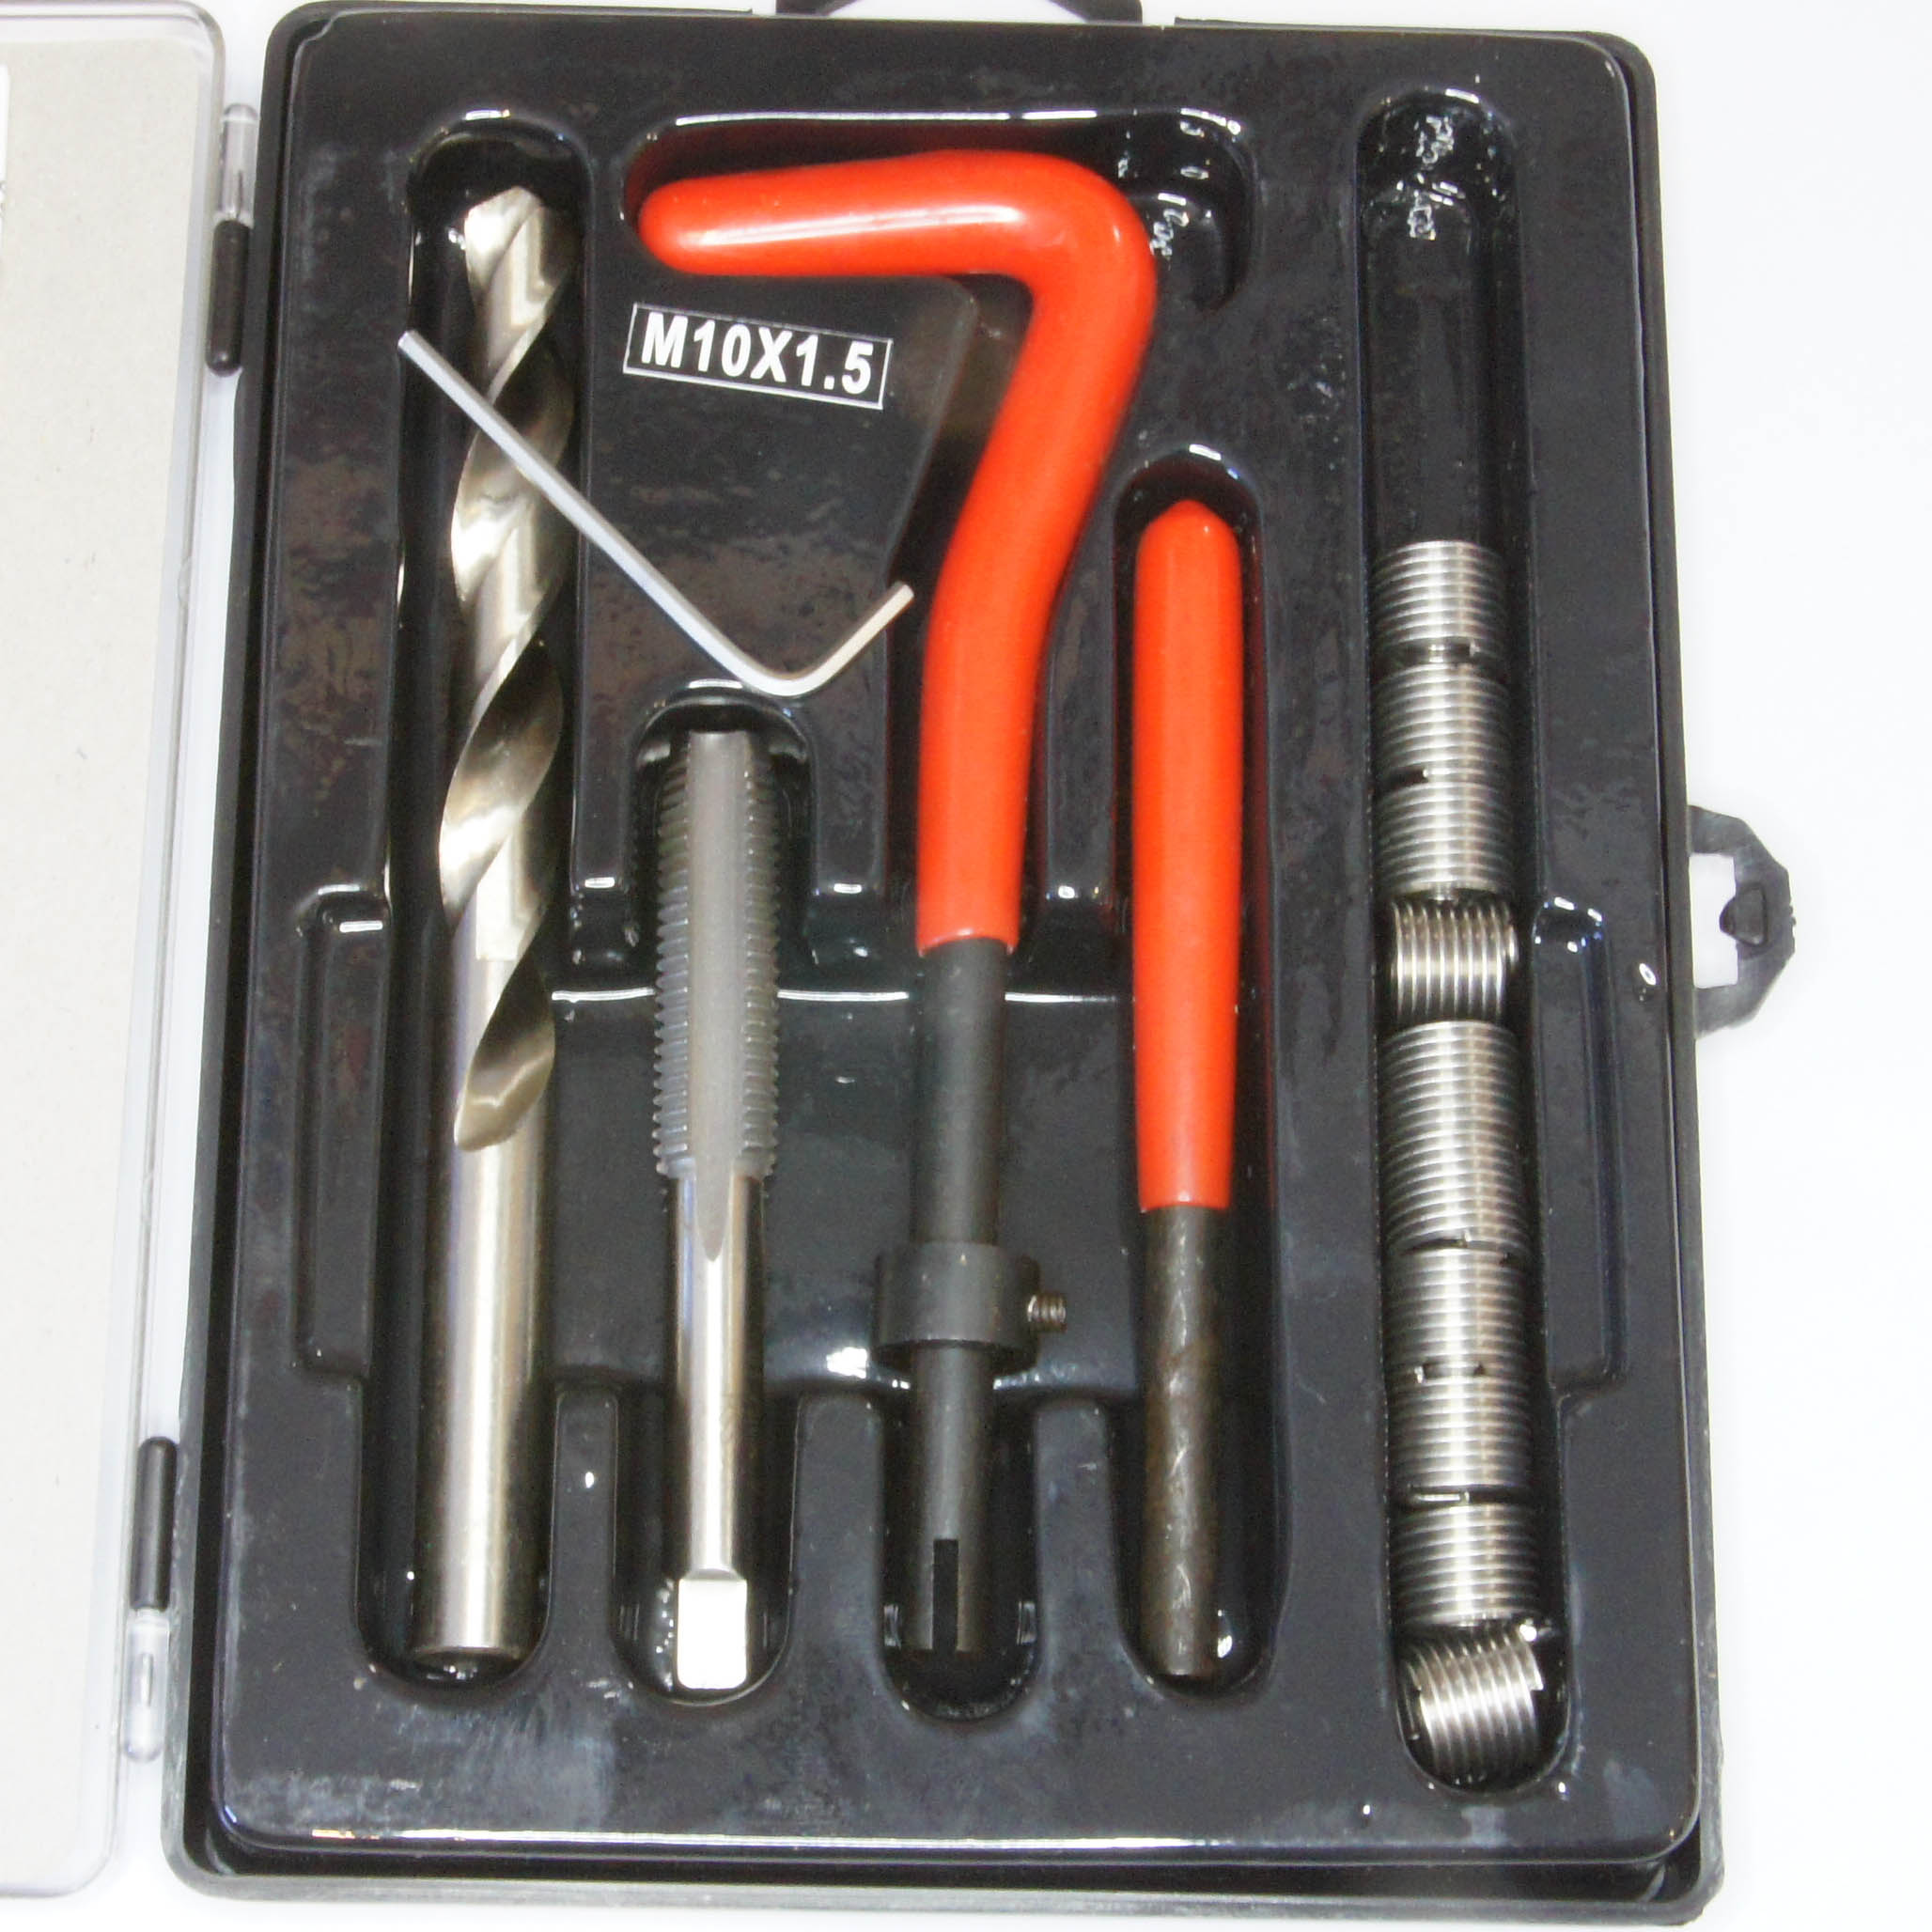 Wisepick 15pc Thread Repair Kit Metric M12 x 1.25 mm Helicoil Thread Repair Insert Set 